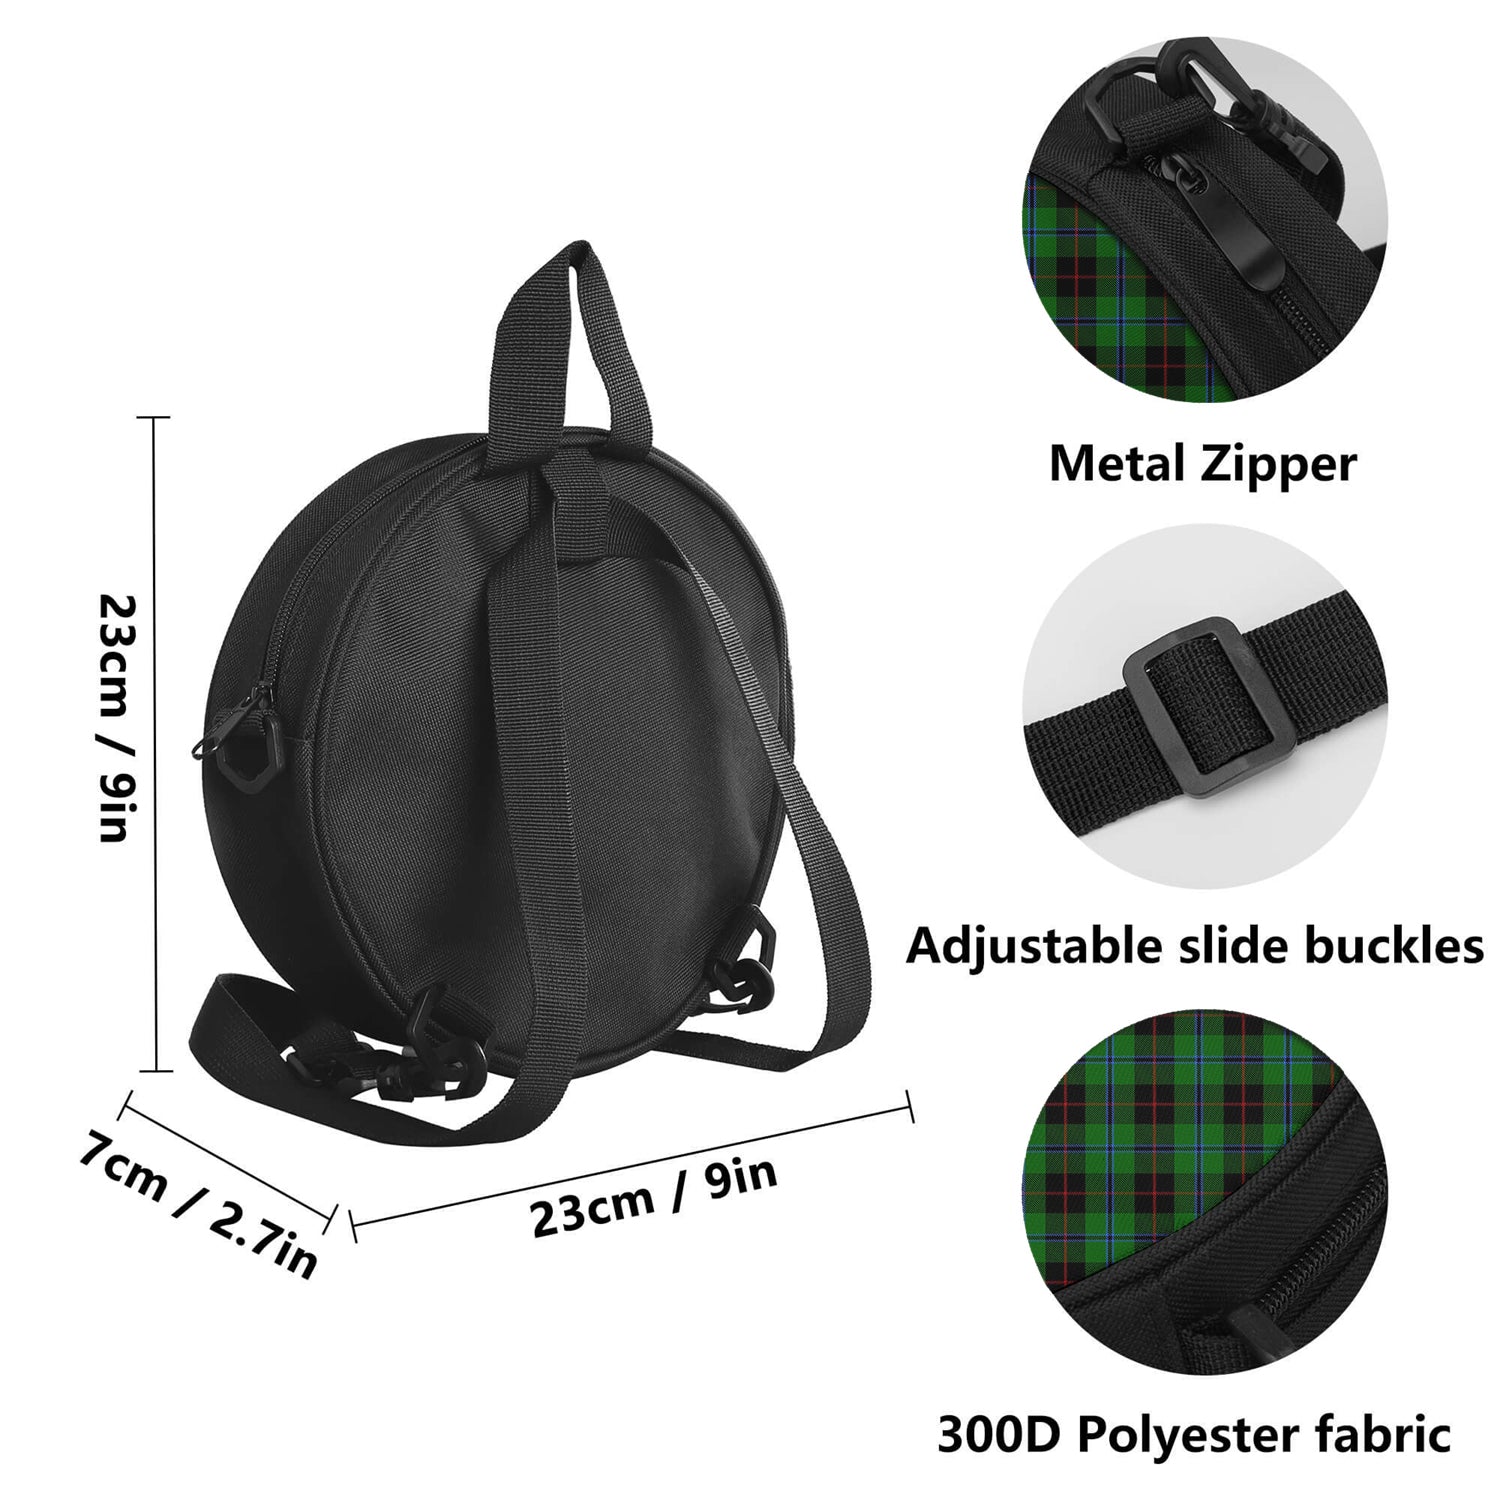 douglas-black-tartan-round-satchel-bags